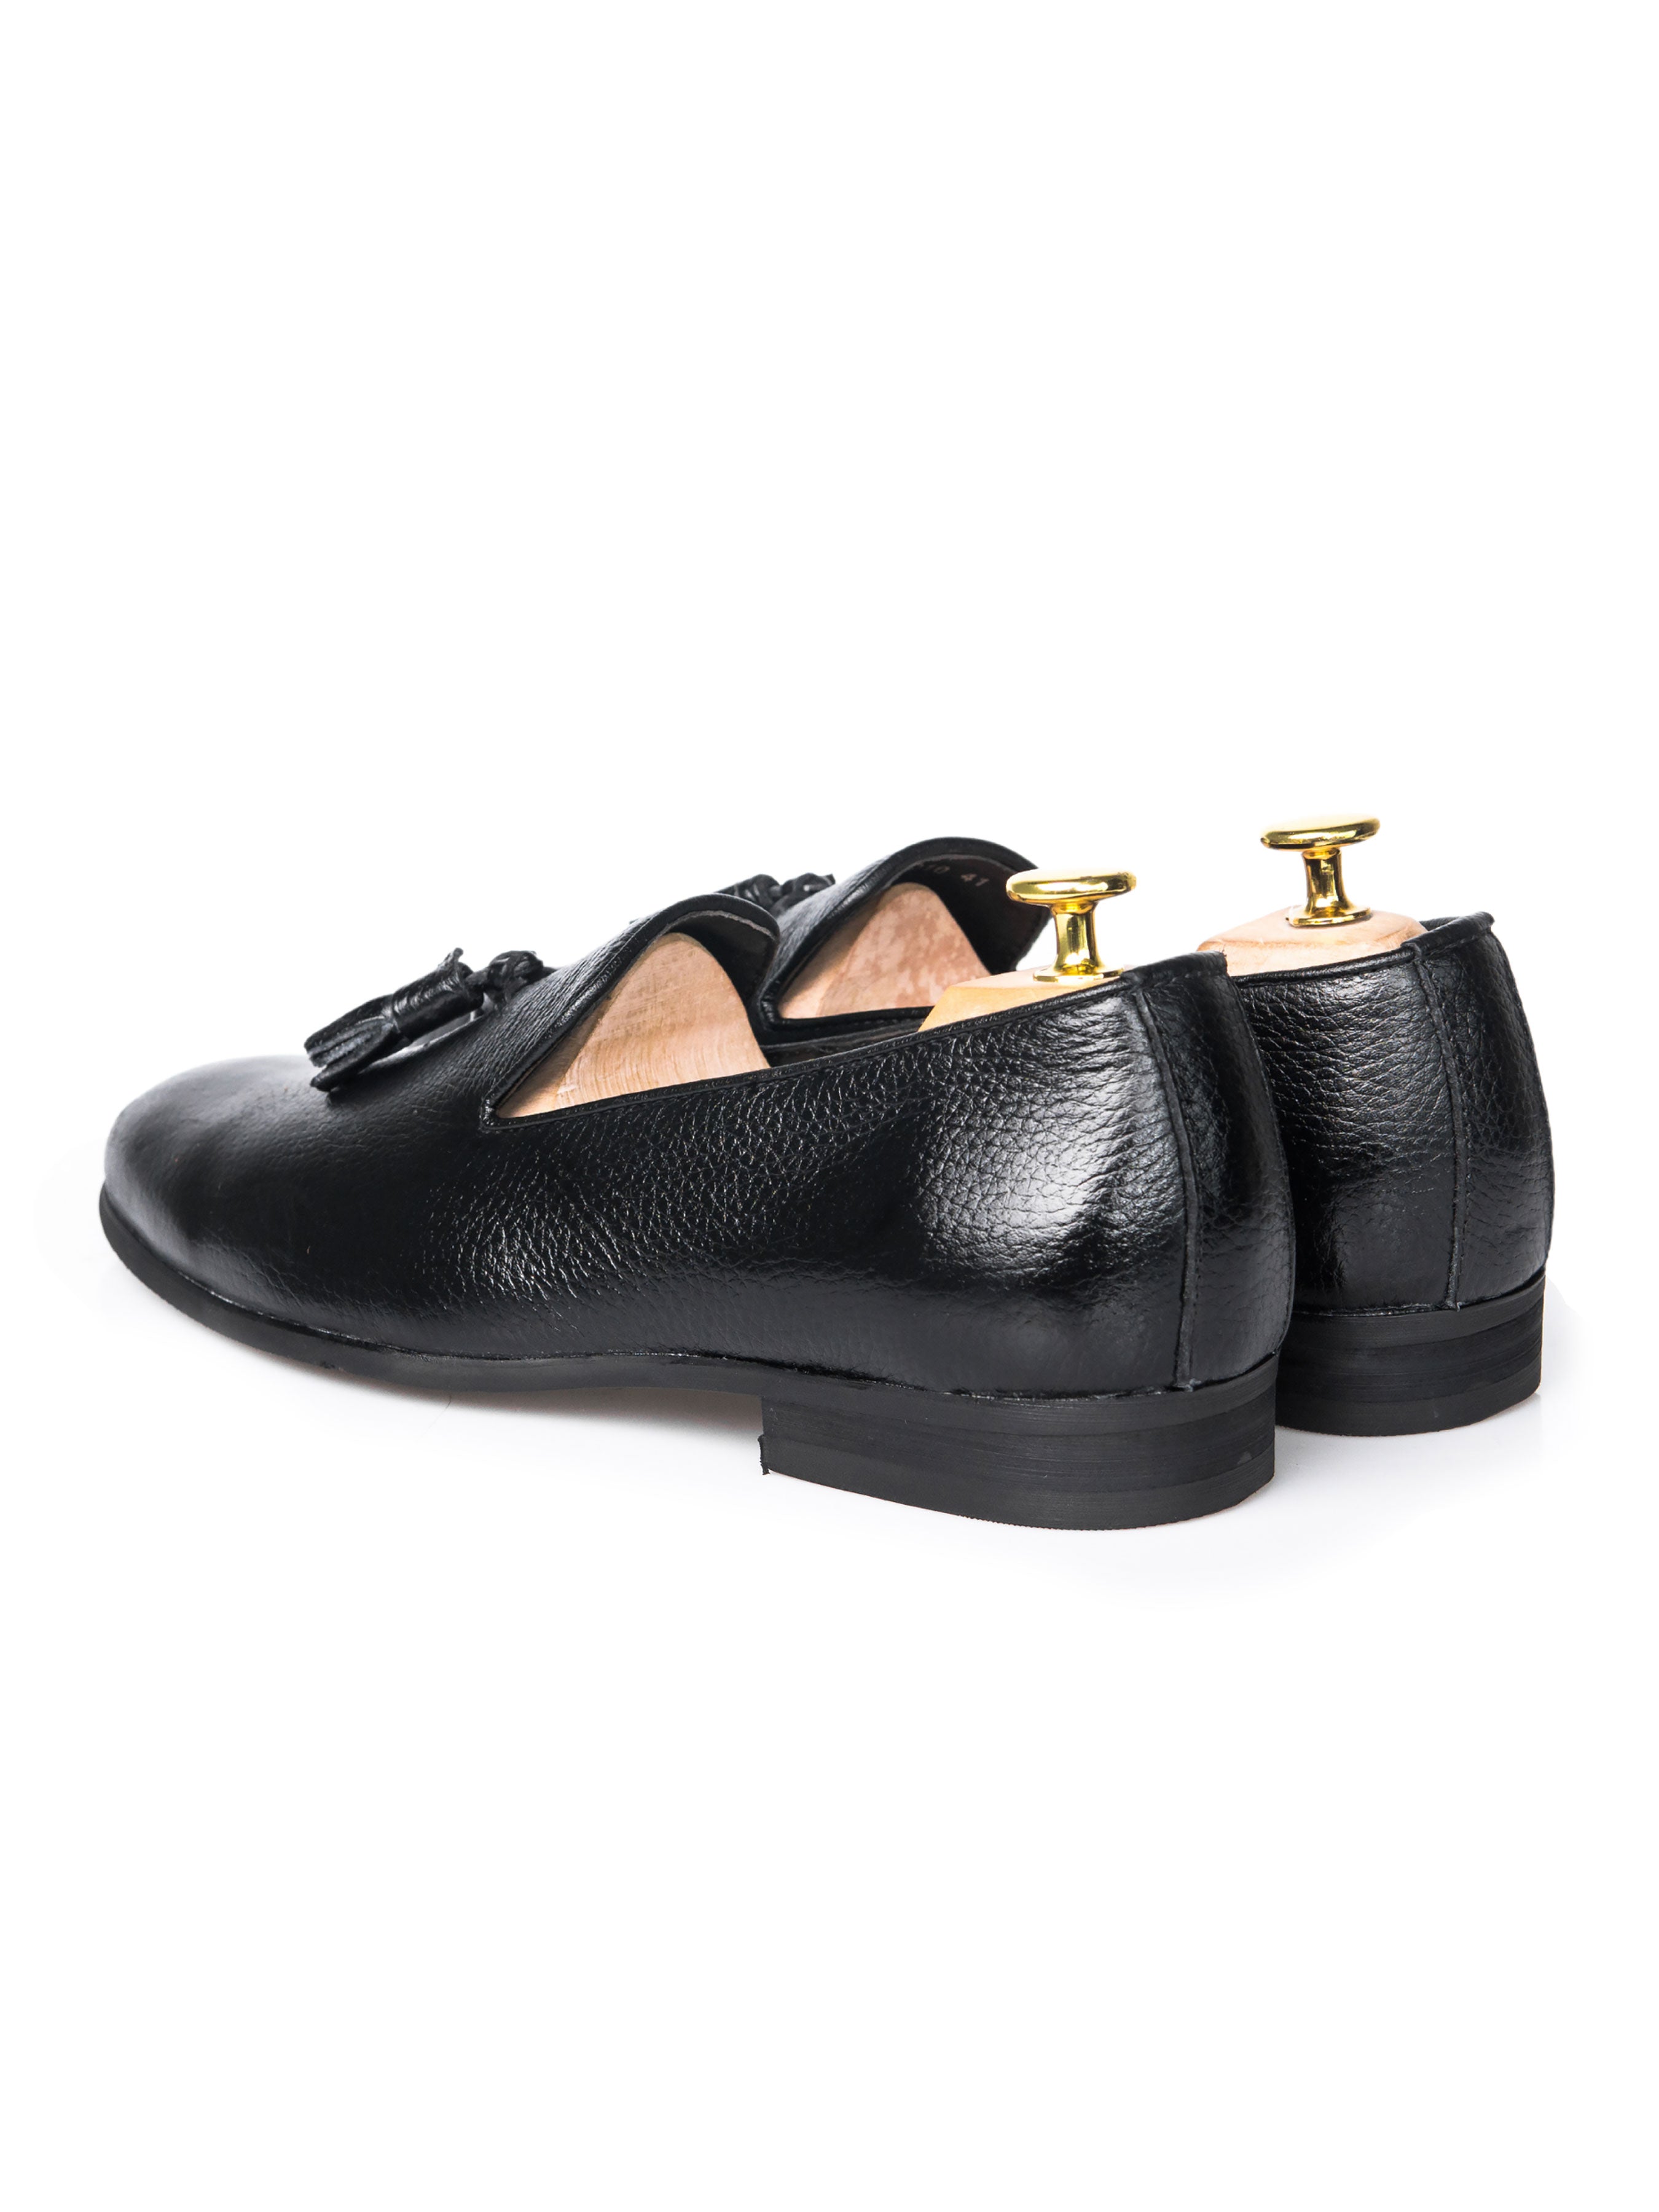 Loafer Slipper - Black Pebble Grain Leather - Zeve Shoes